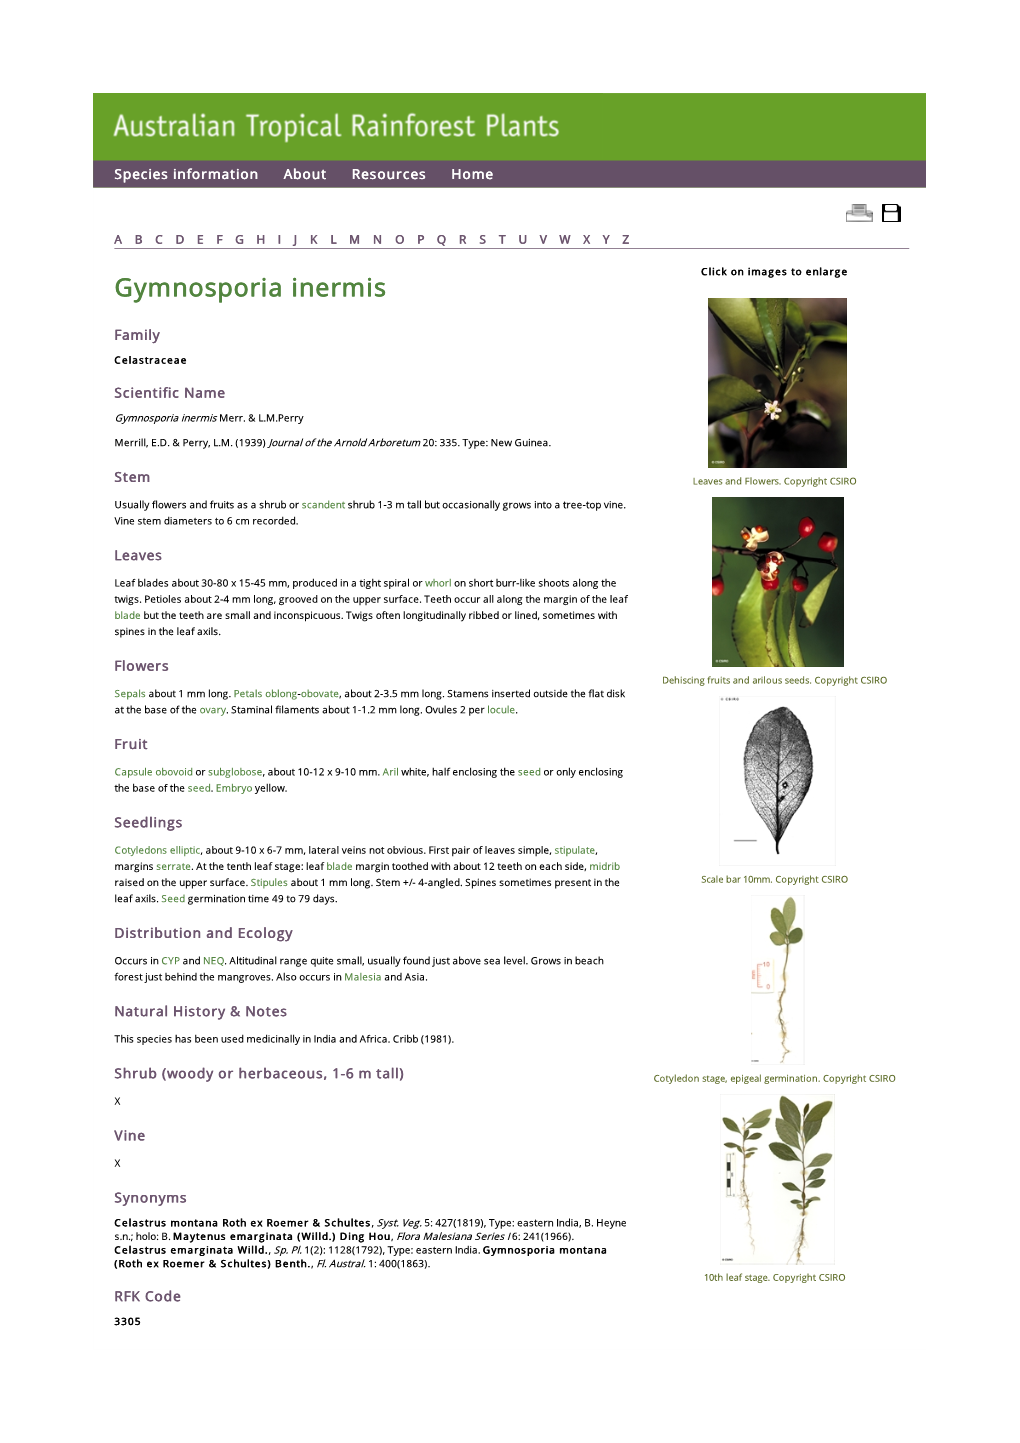 Gymnosporia Inermis Click on Images to Enlarge